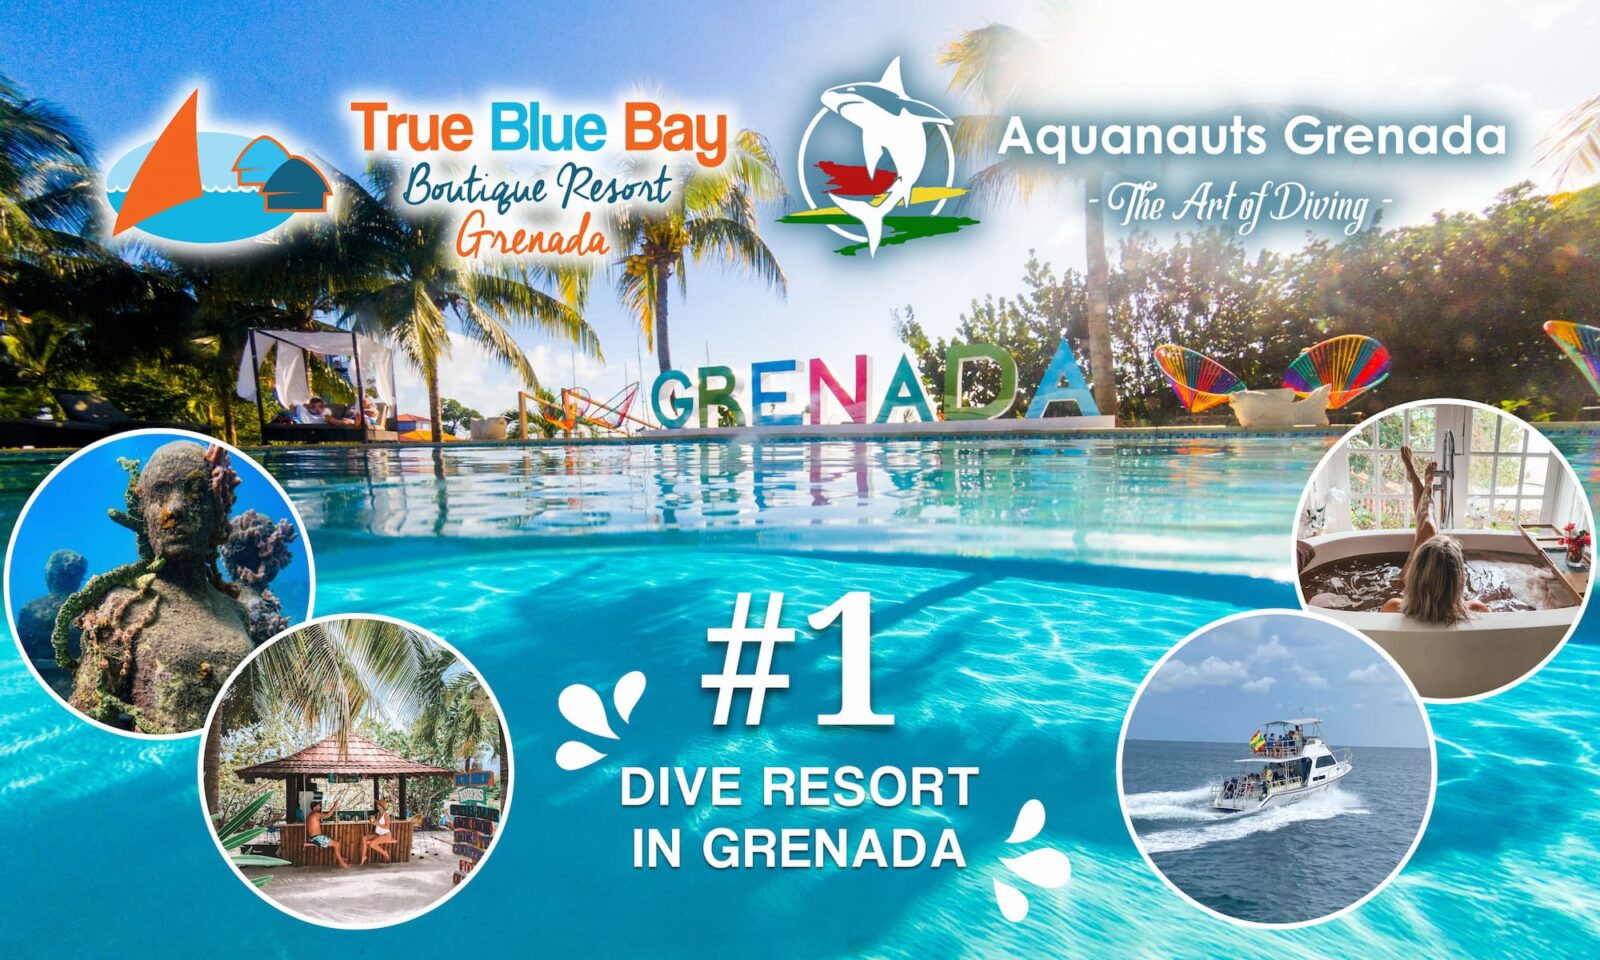 Aquanauts-Grenada-X-True-Blue-Bay-Boutique-Resort-Banner